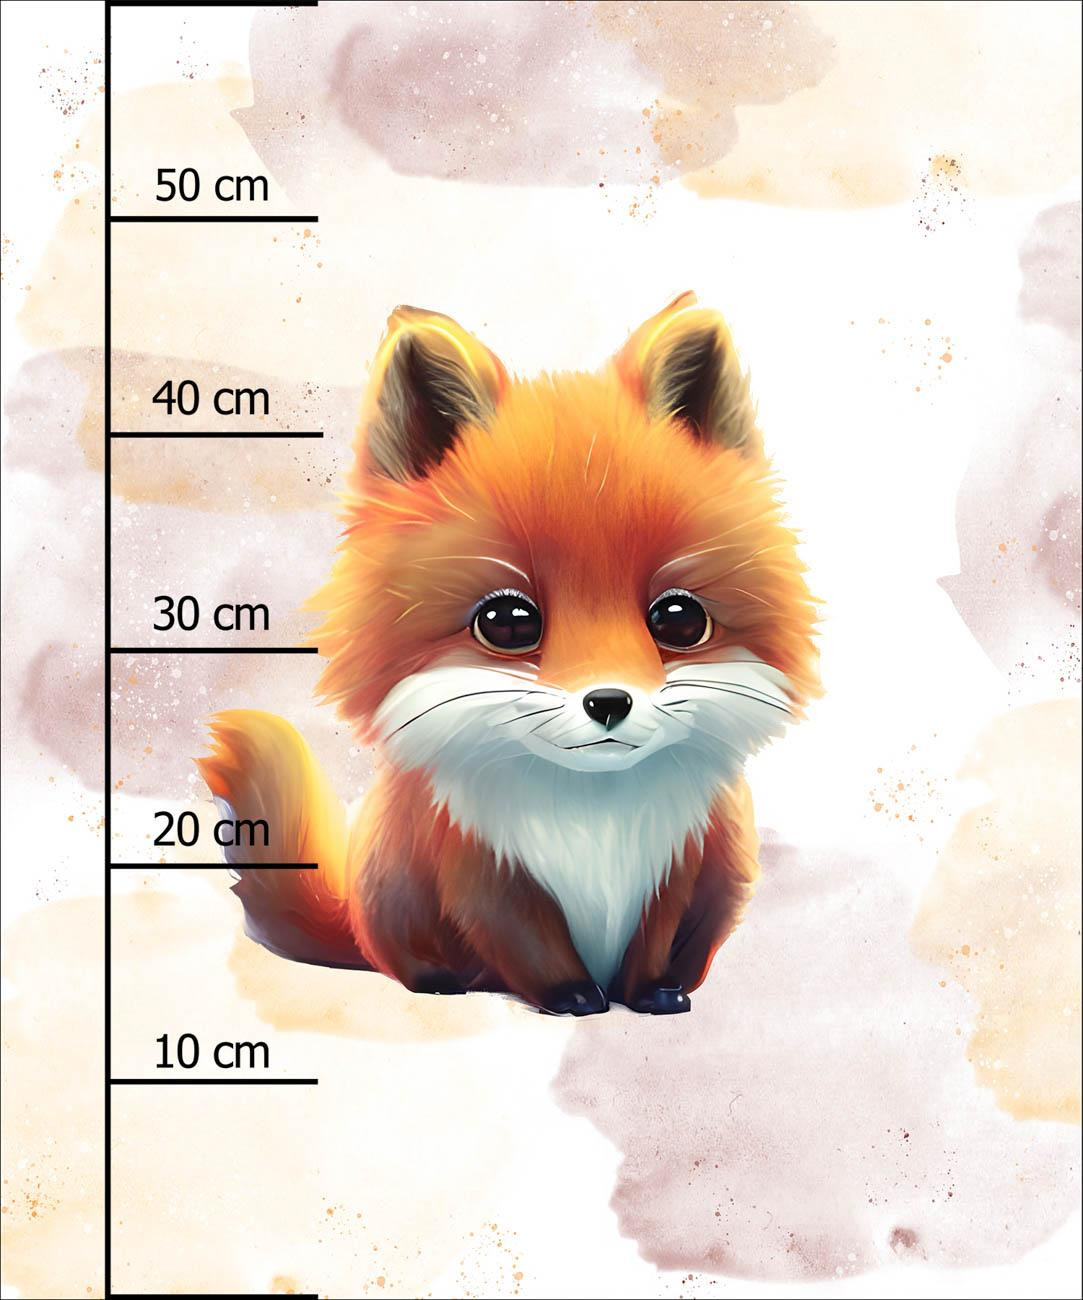 BABY FOX - Paneel (60cm x 50cm) Wintersweat angeraut mit Elastan ITY